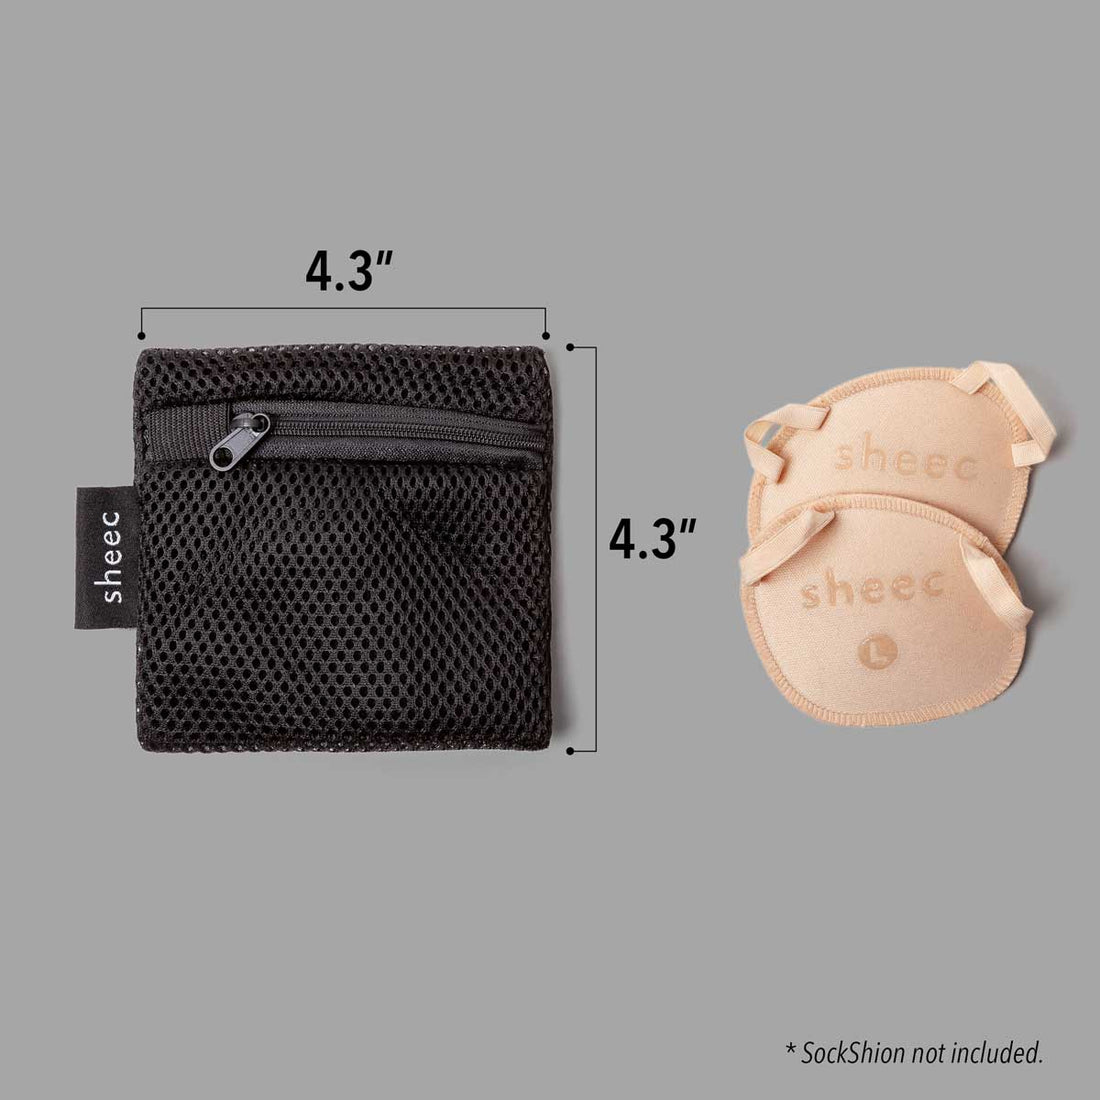 Small Laundry Mesh bag - Sockshion Travel Case Dimensions